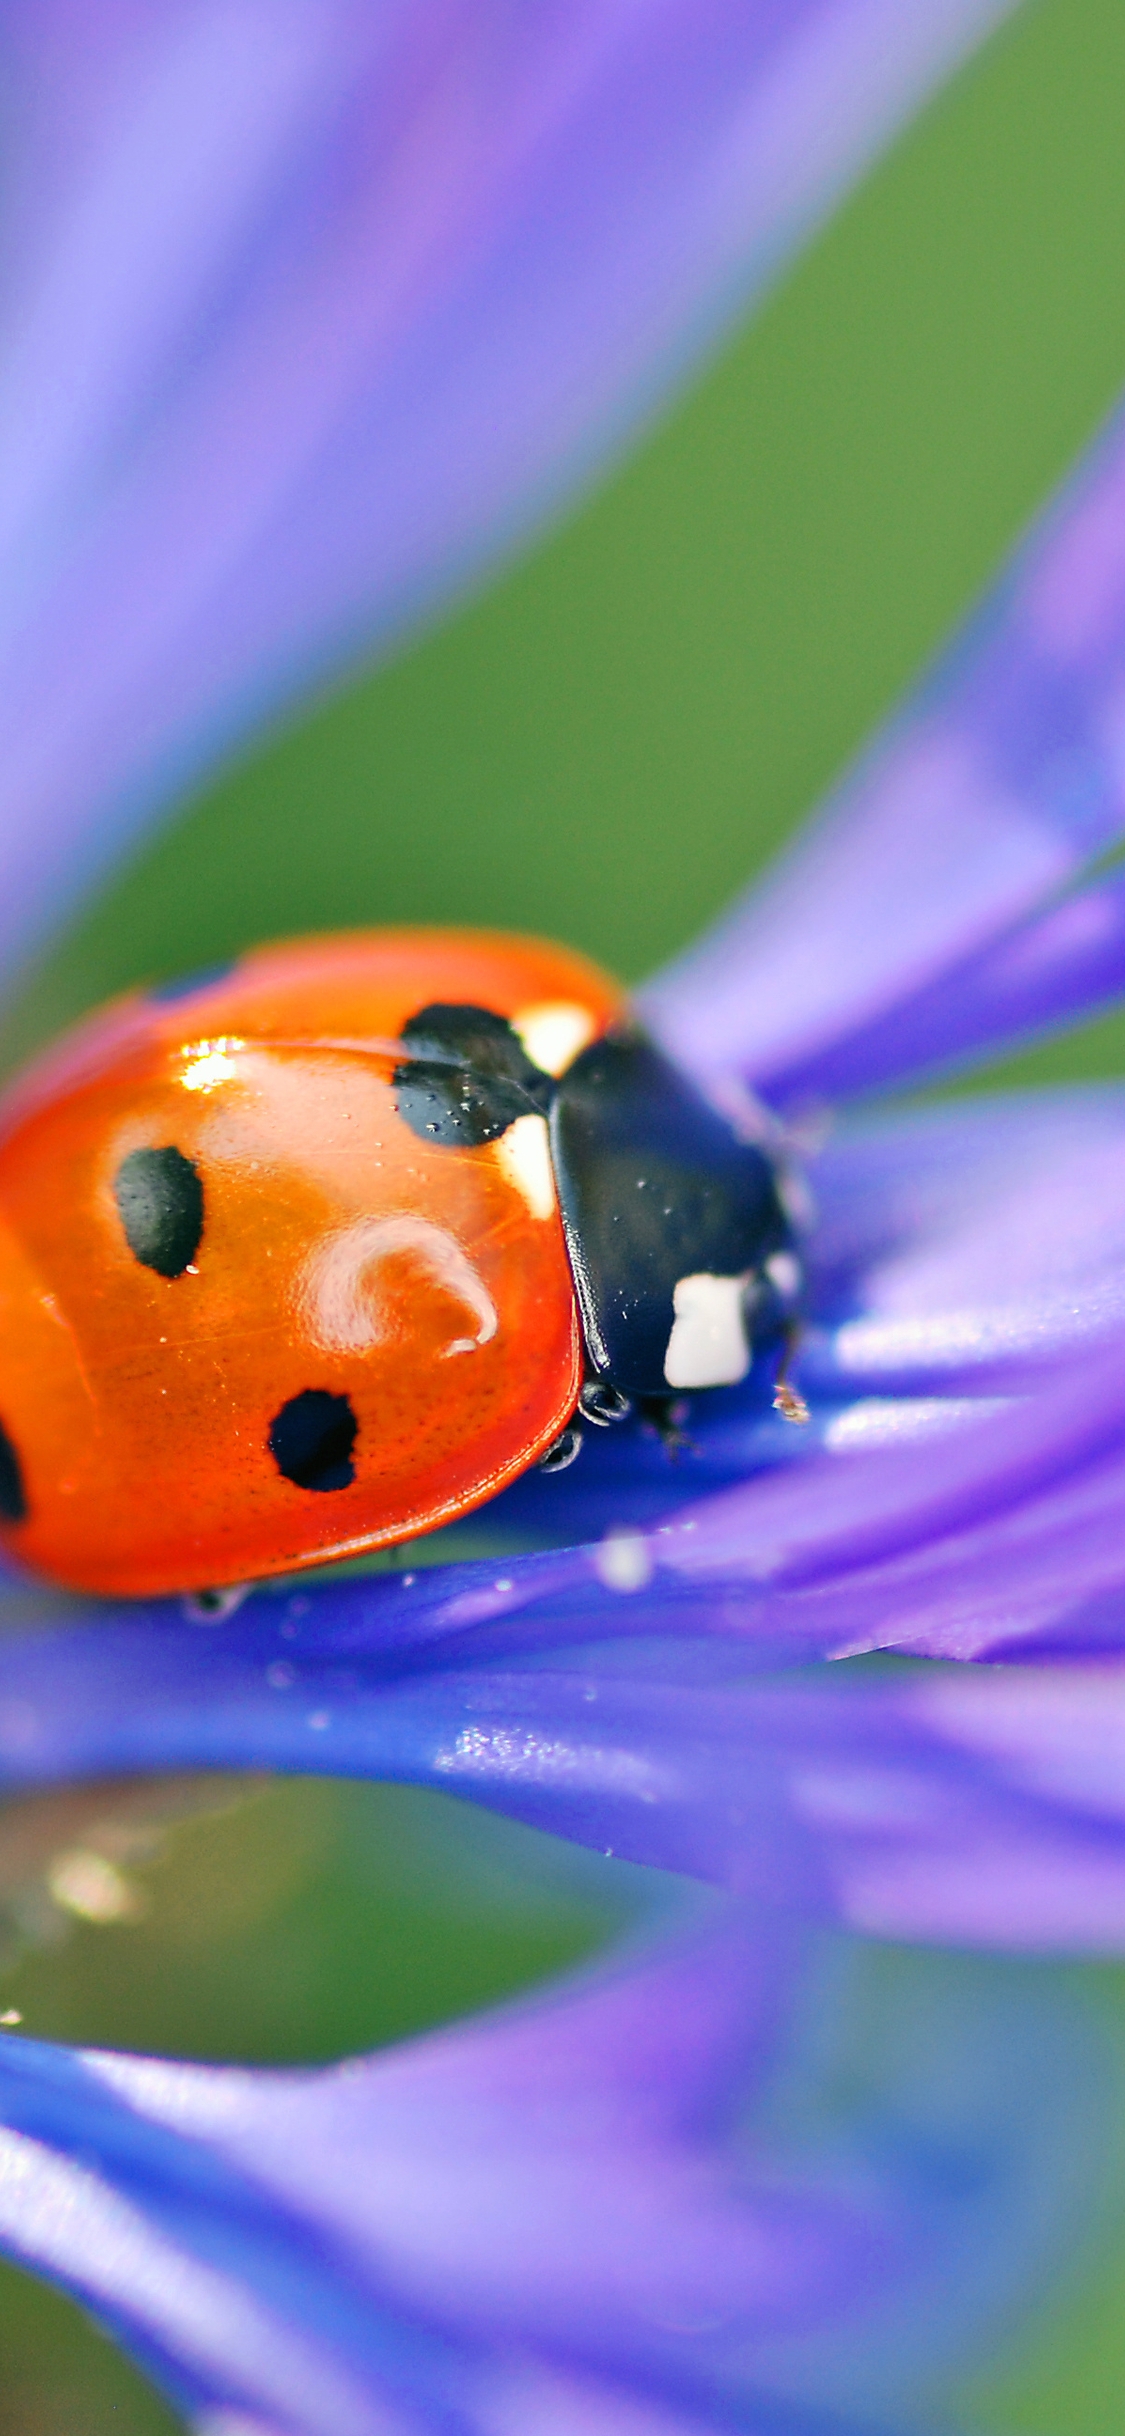 Image: Ladybug, point, sitting, plant, flower, petals